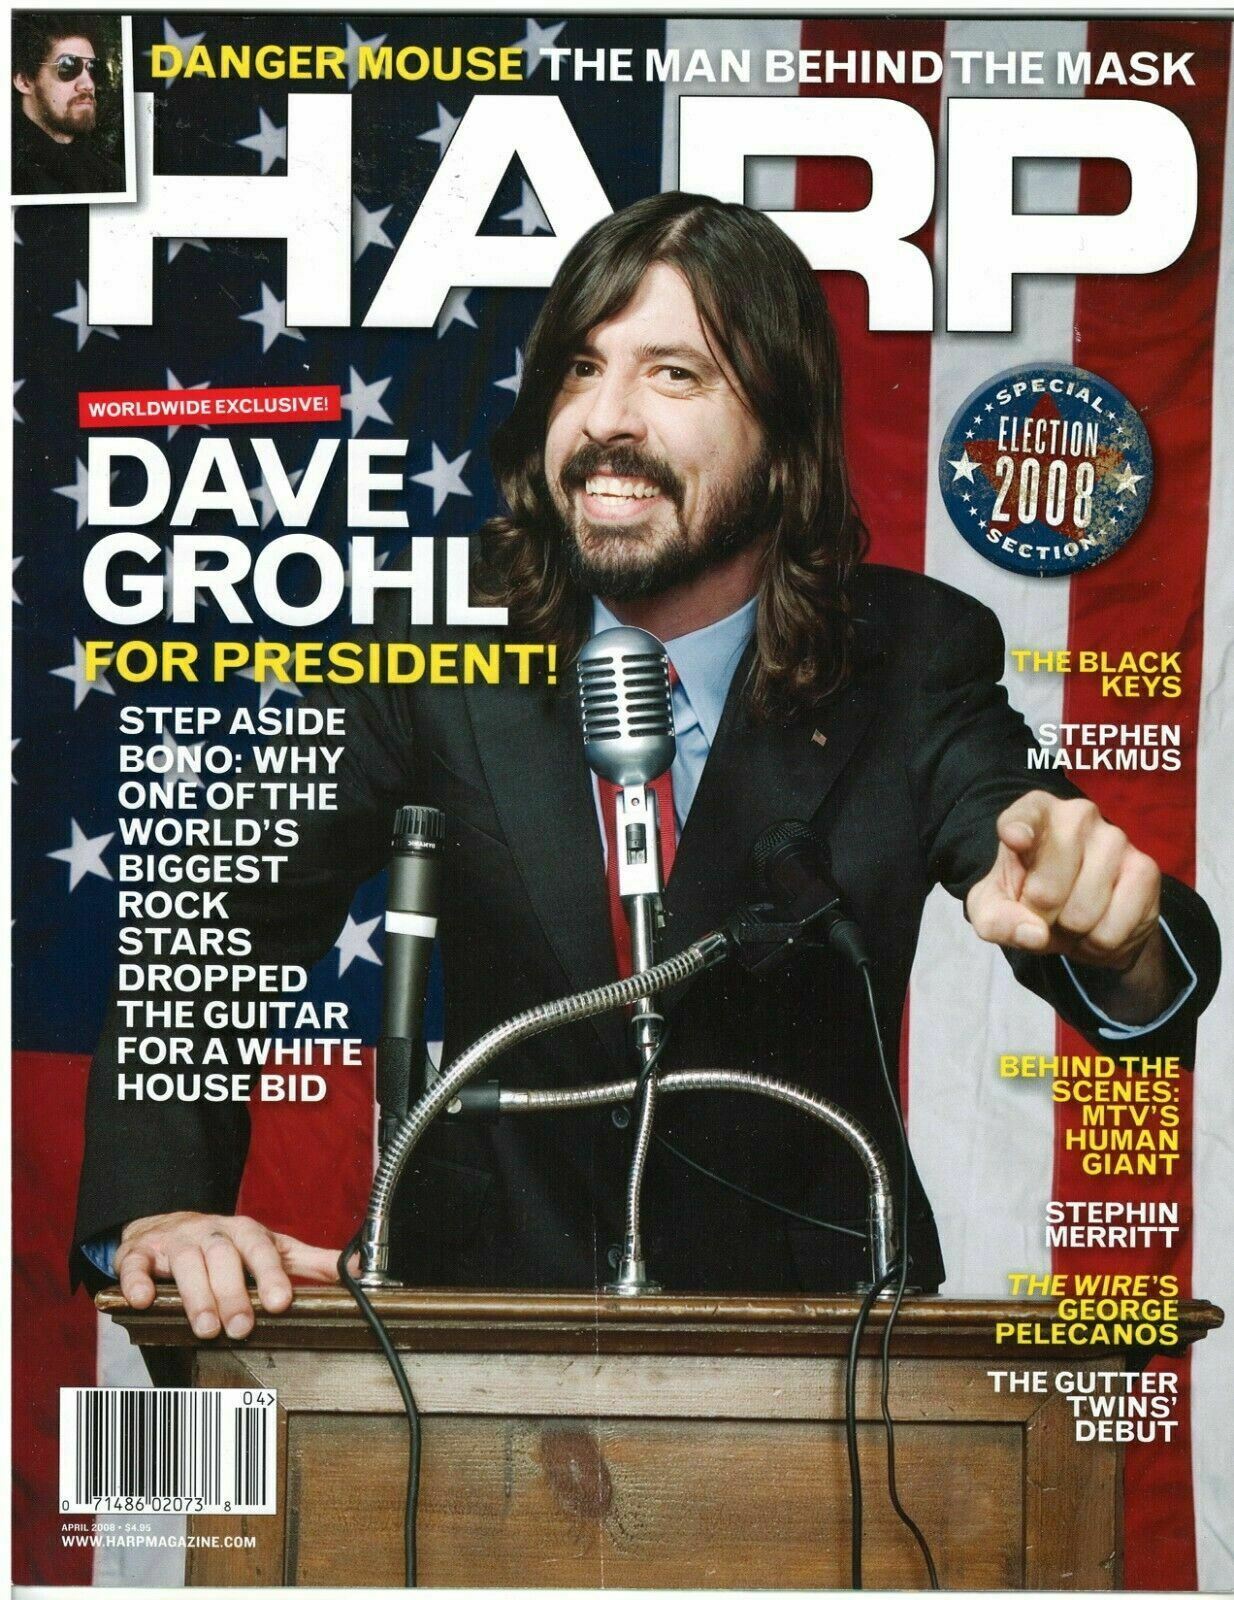 Harp Magazine March 2008 Dave Grohl Bono The Black Keys Danger Mouse Pelecanaos